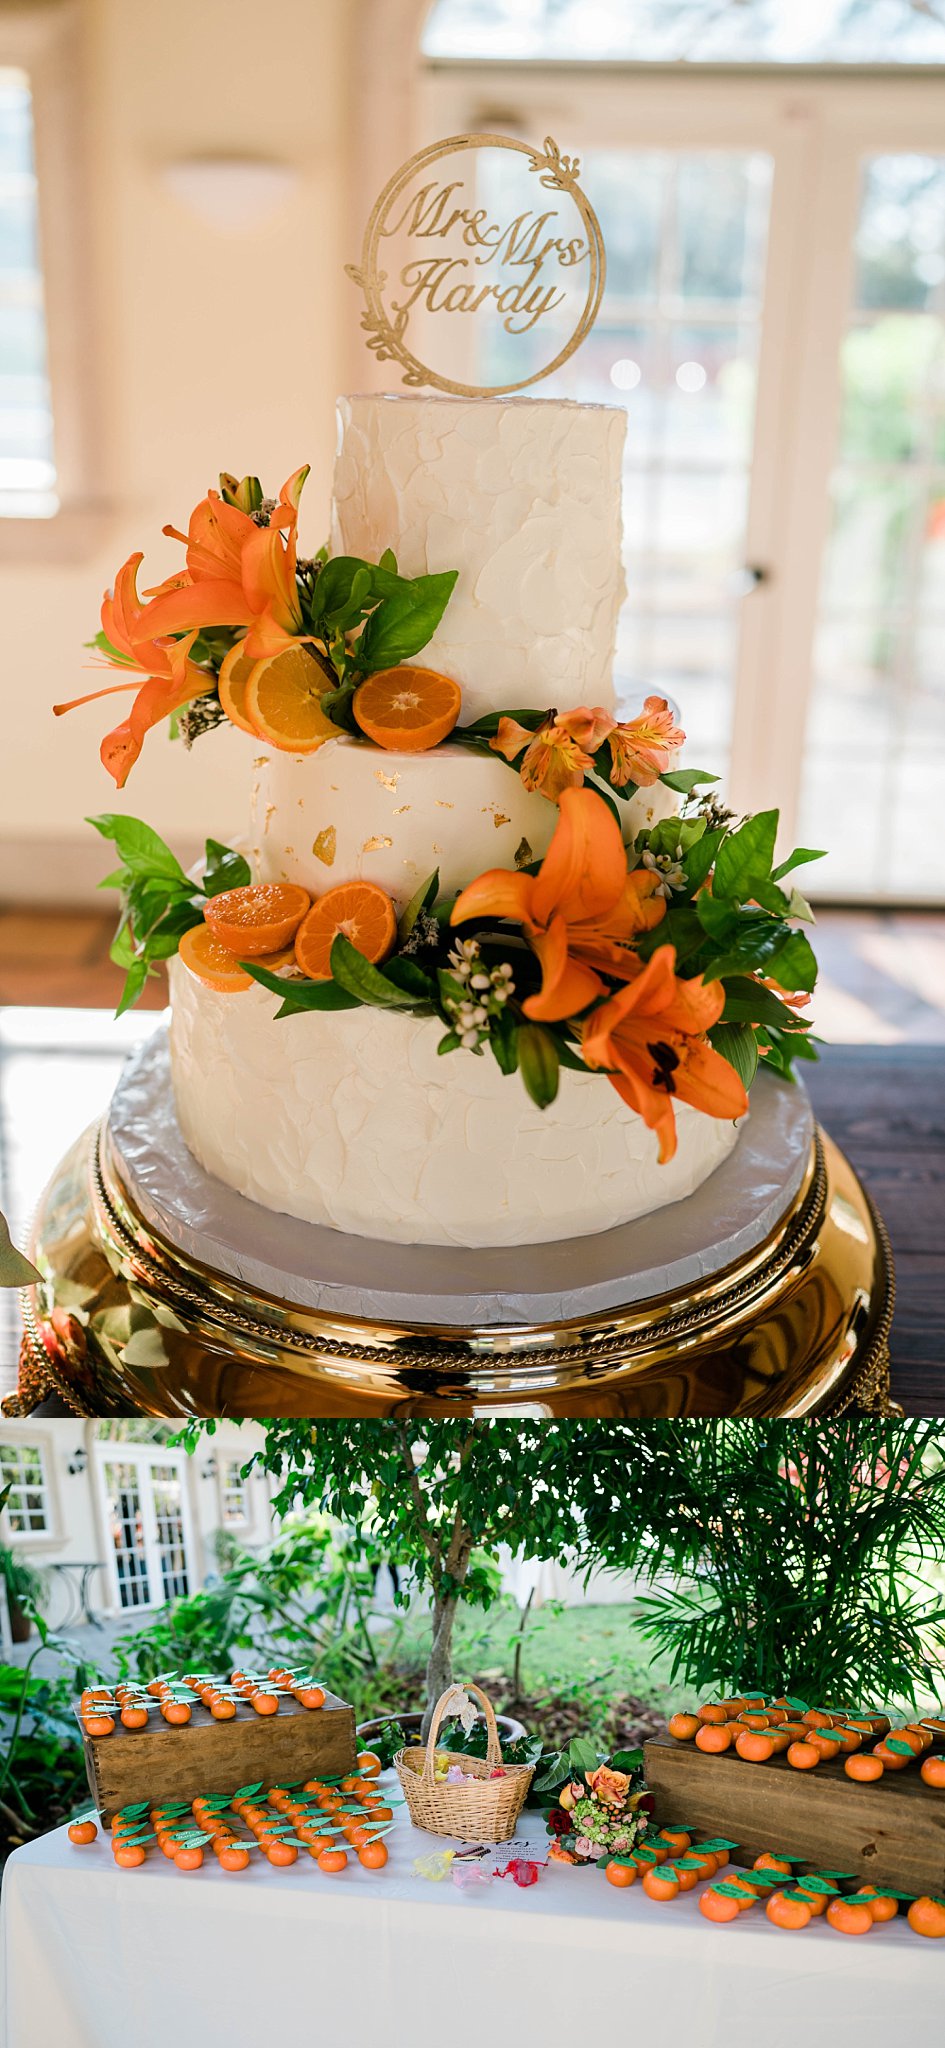 Old Florida Style wedding cake and favors in Bonita Springs, Florida